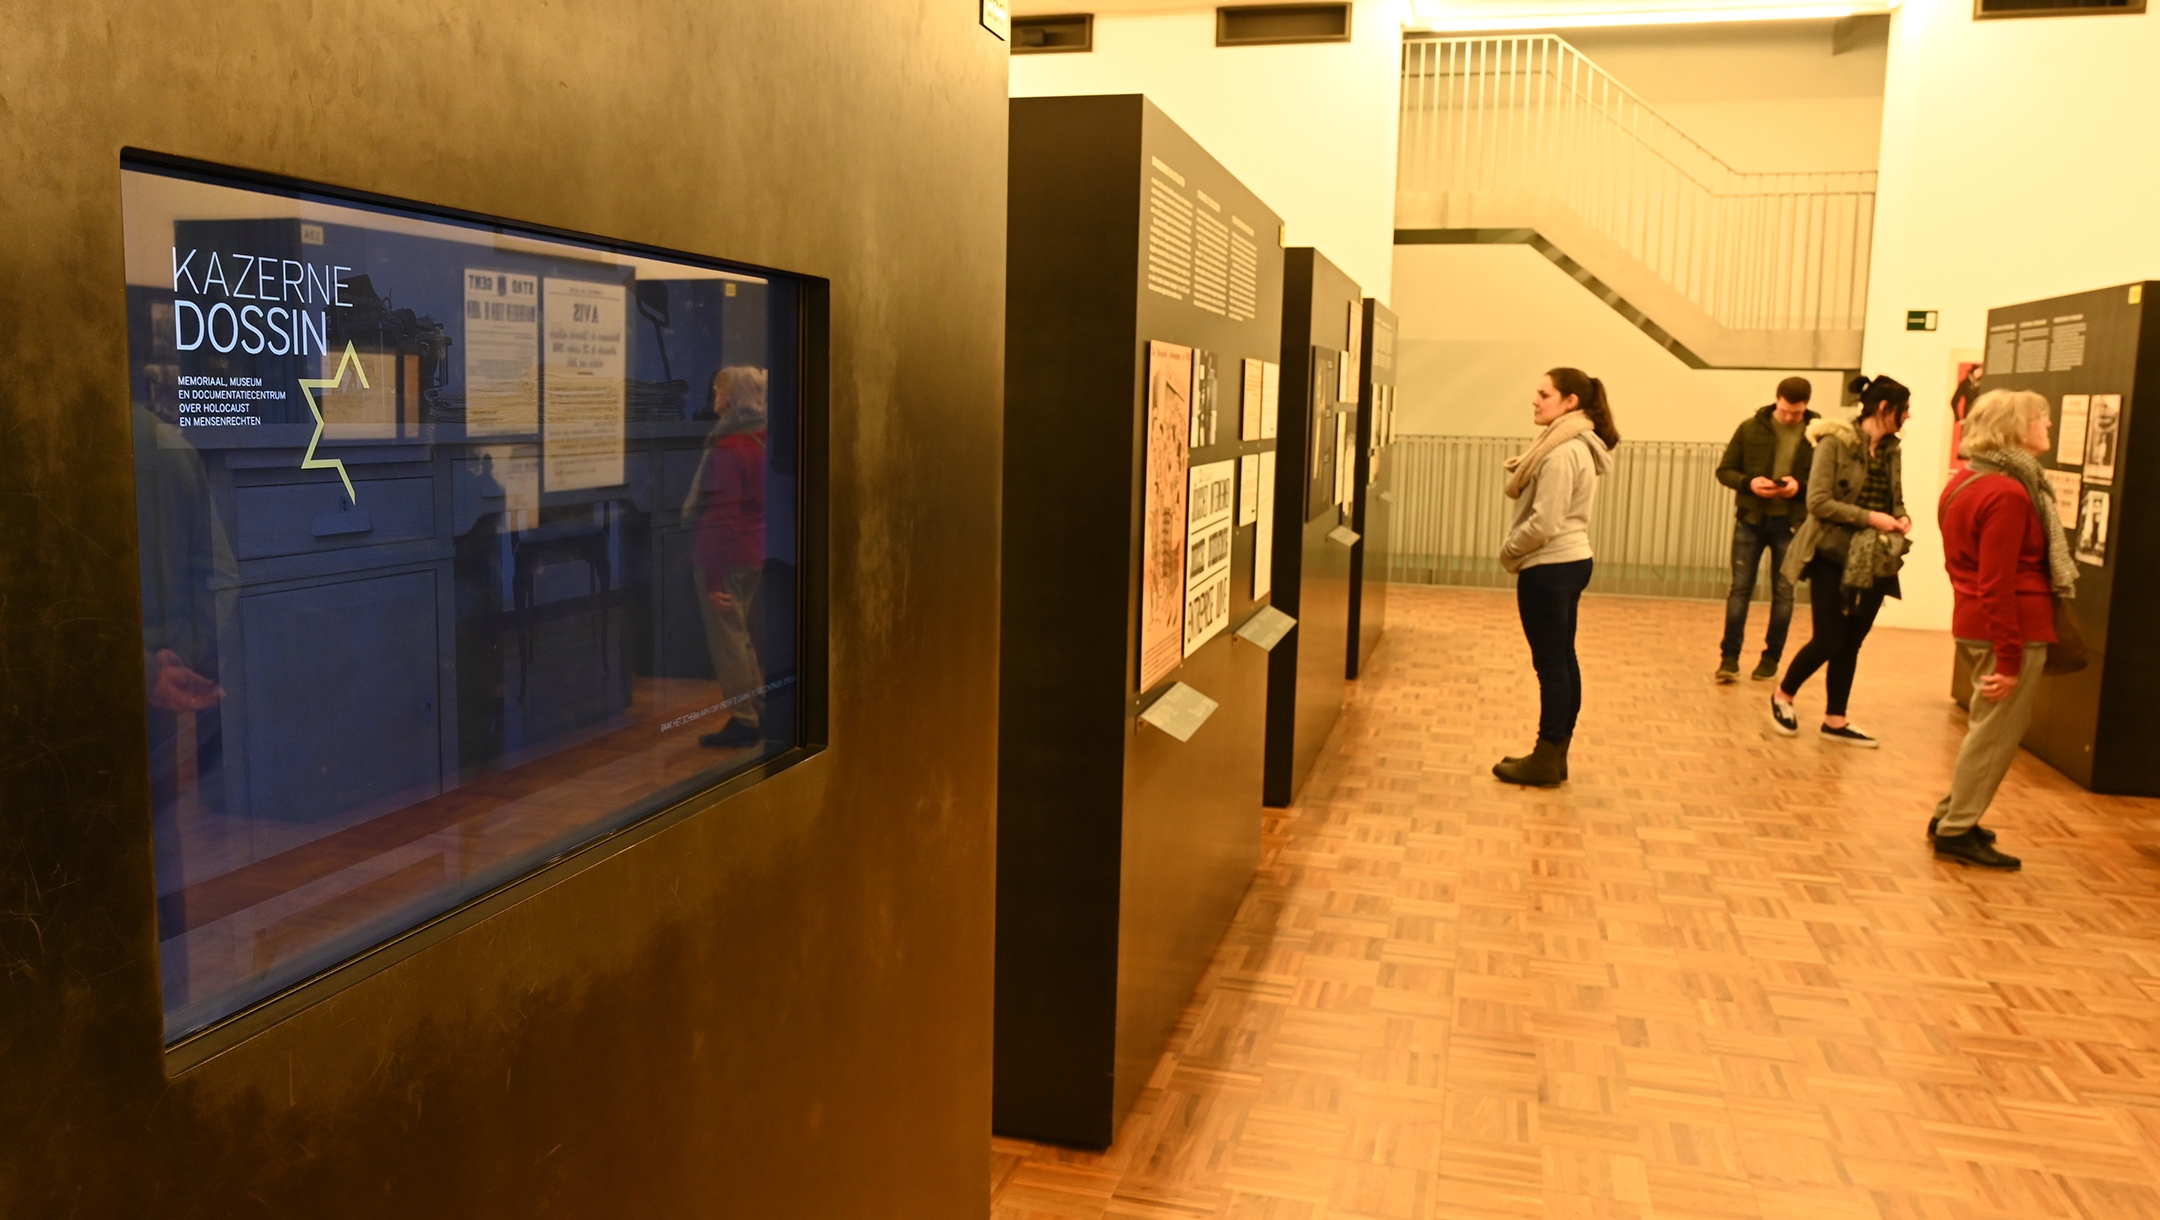 A woman reads about Belgian Jews the Kazerne Dossin Holocaust museum in Mechelen, Belgium on Dec. 22, 2019. (Cnaan Liphshiz)